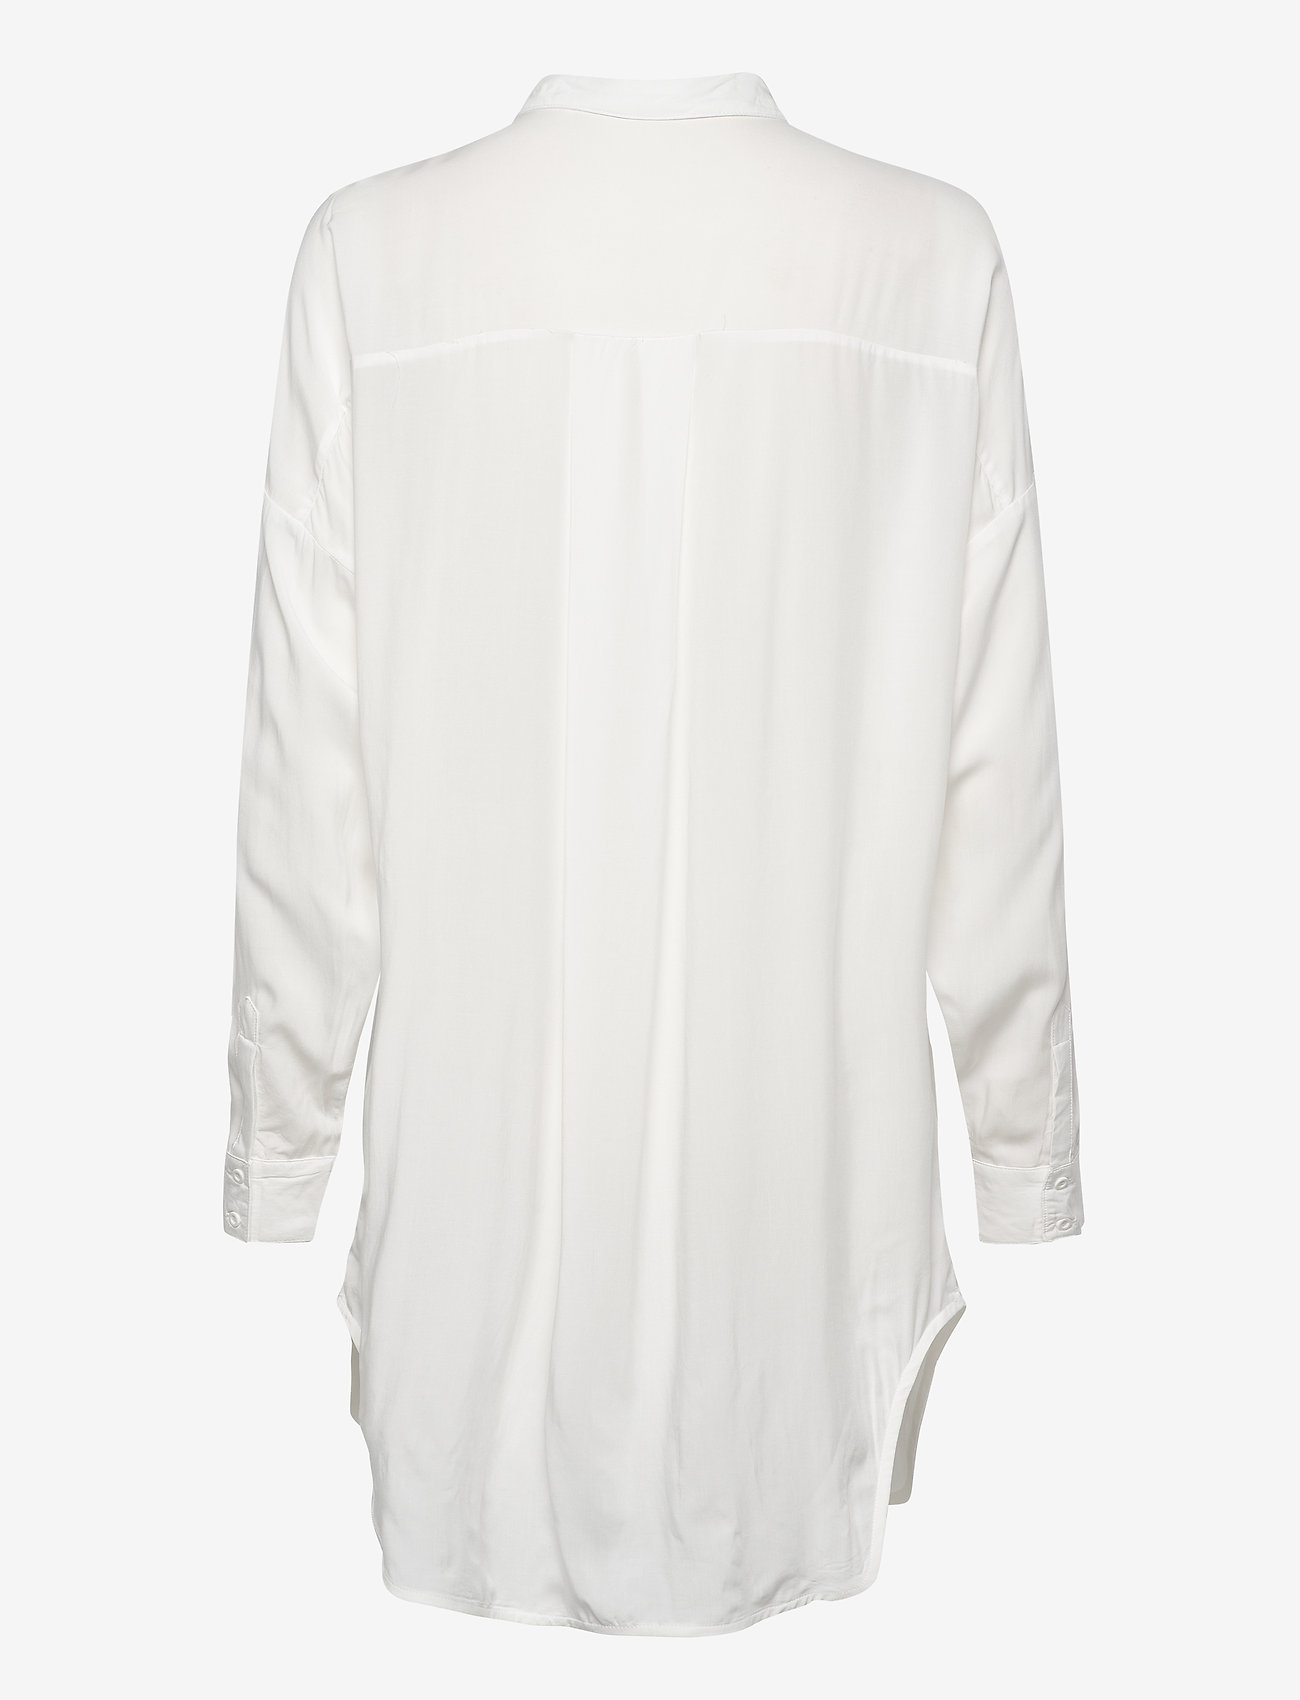 Soft Rebels - SRFreedom Long shirt - marškiniai ilgomis rankovėmis - snow white / off white - 1